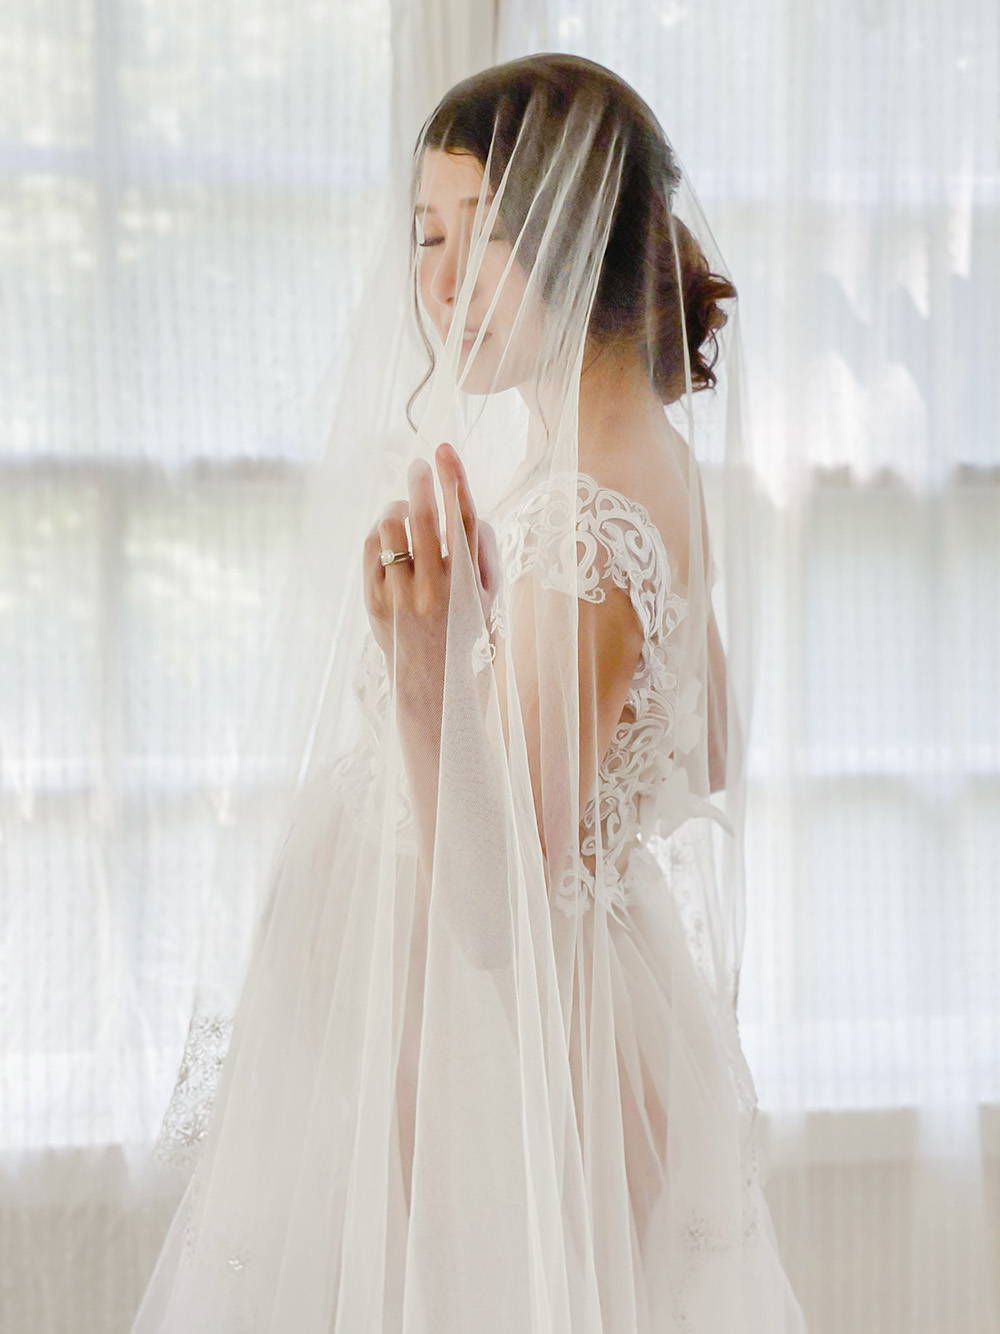 REFINED x Caroline Tran Mobile: Bride in Veil